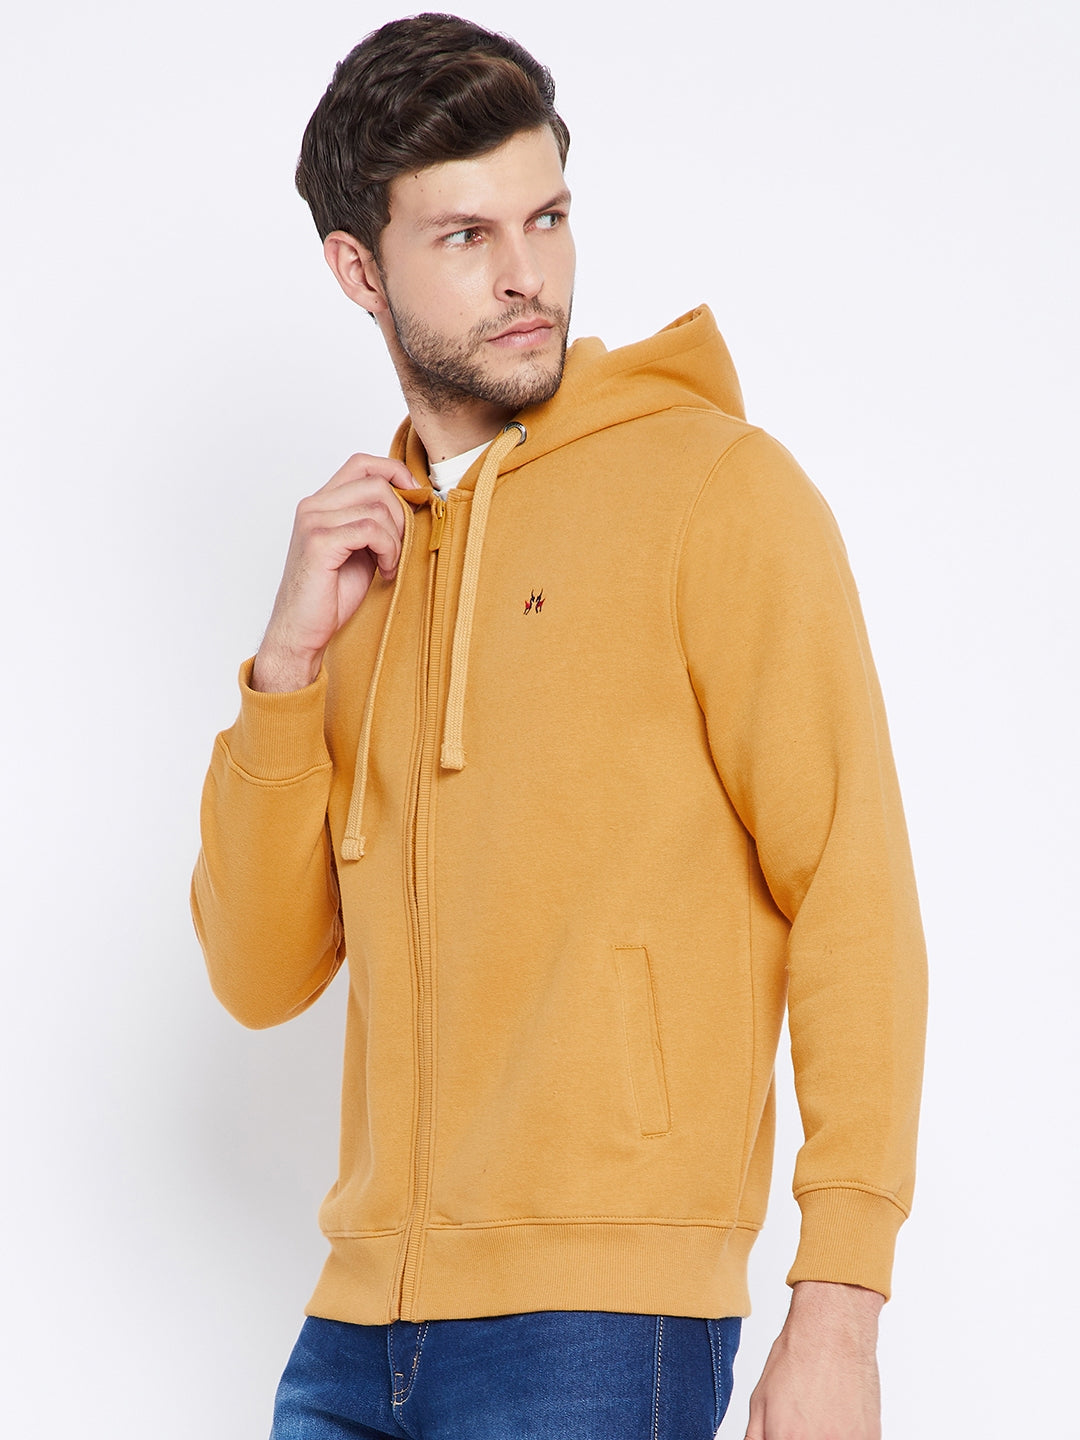 Mustard Hooded Sweatshirt - Men Sweatshirts